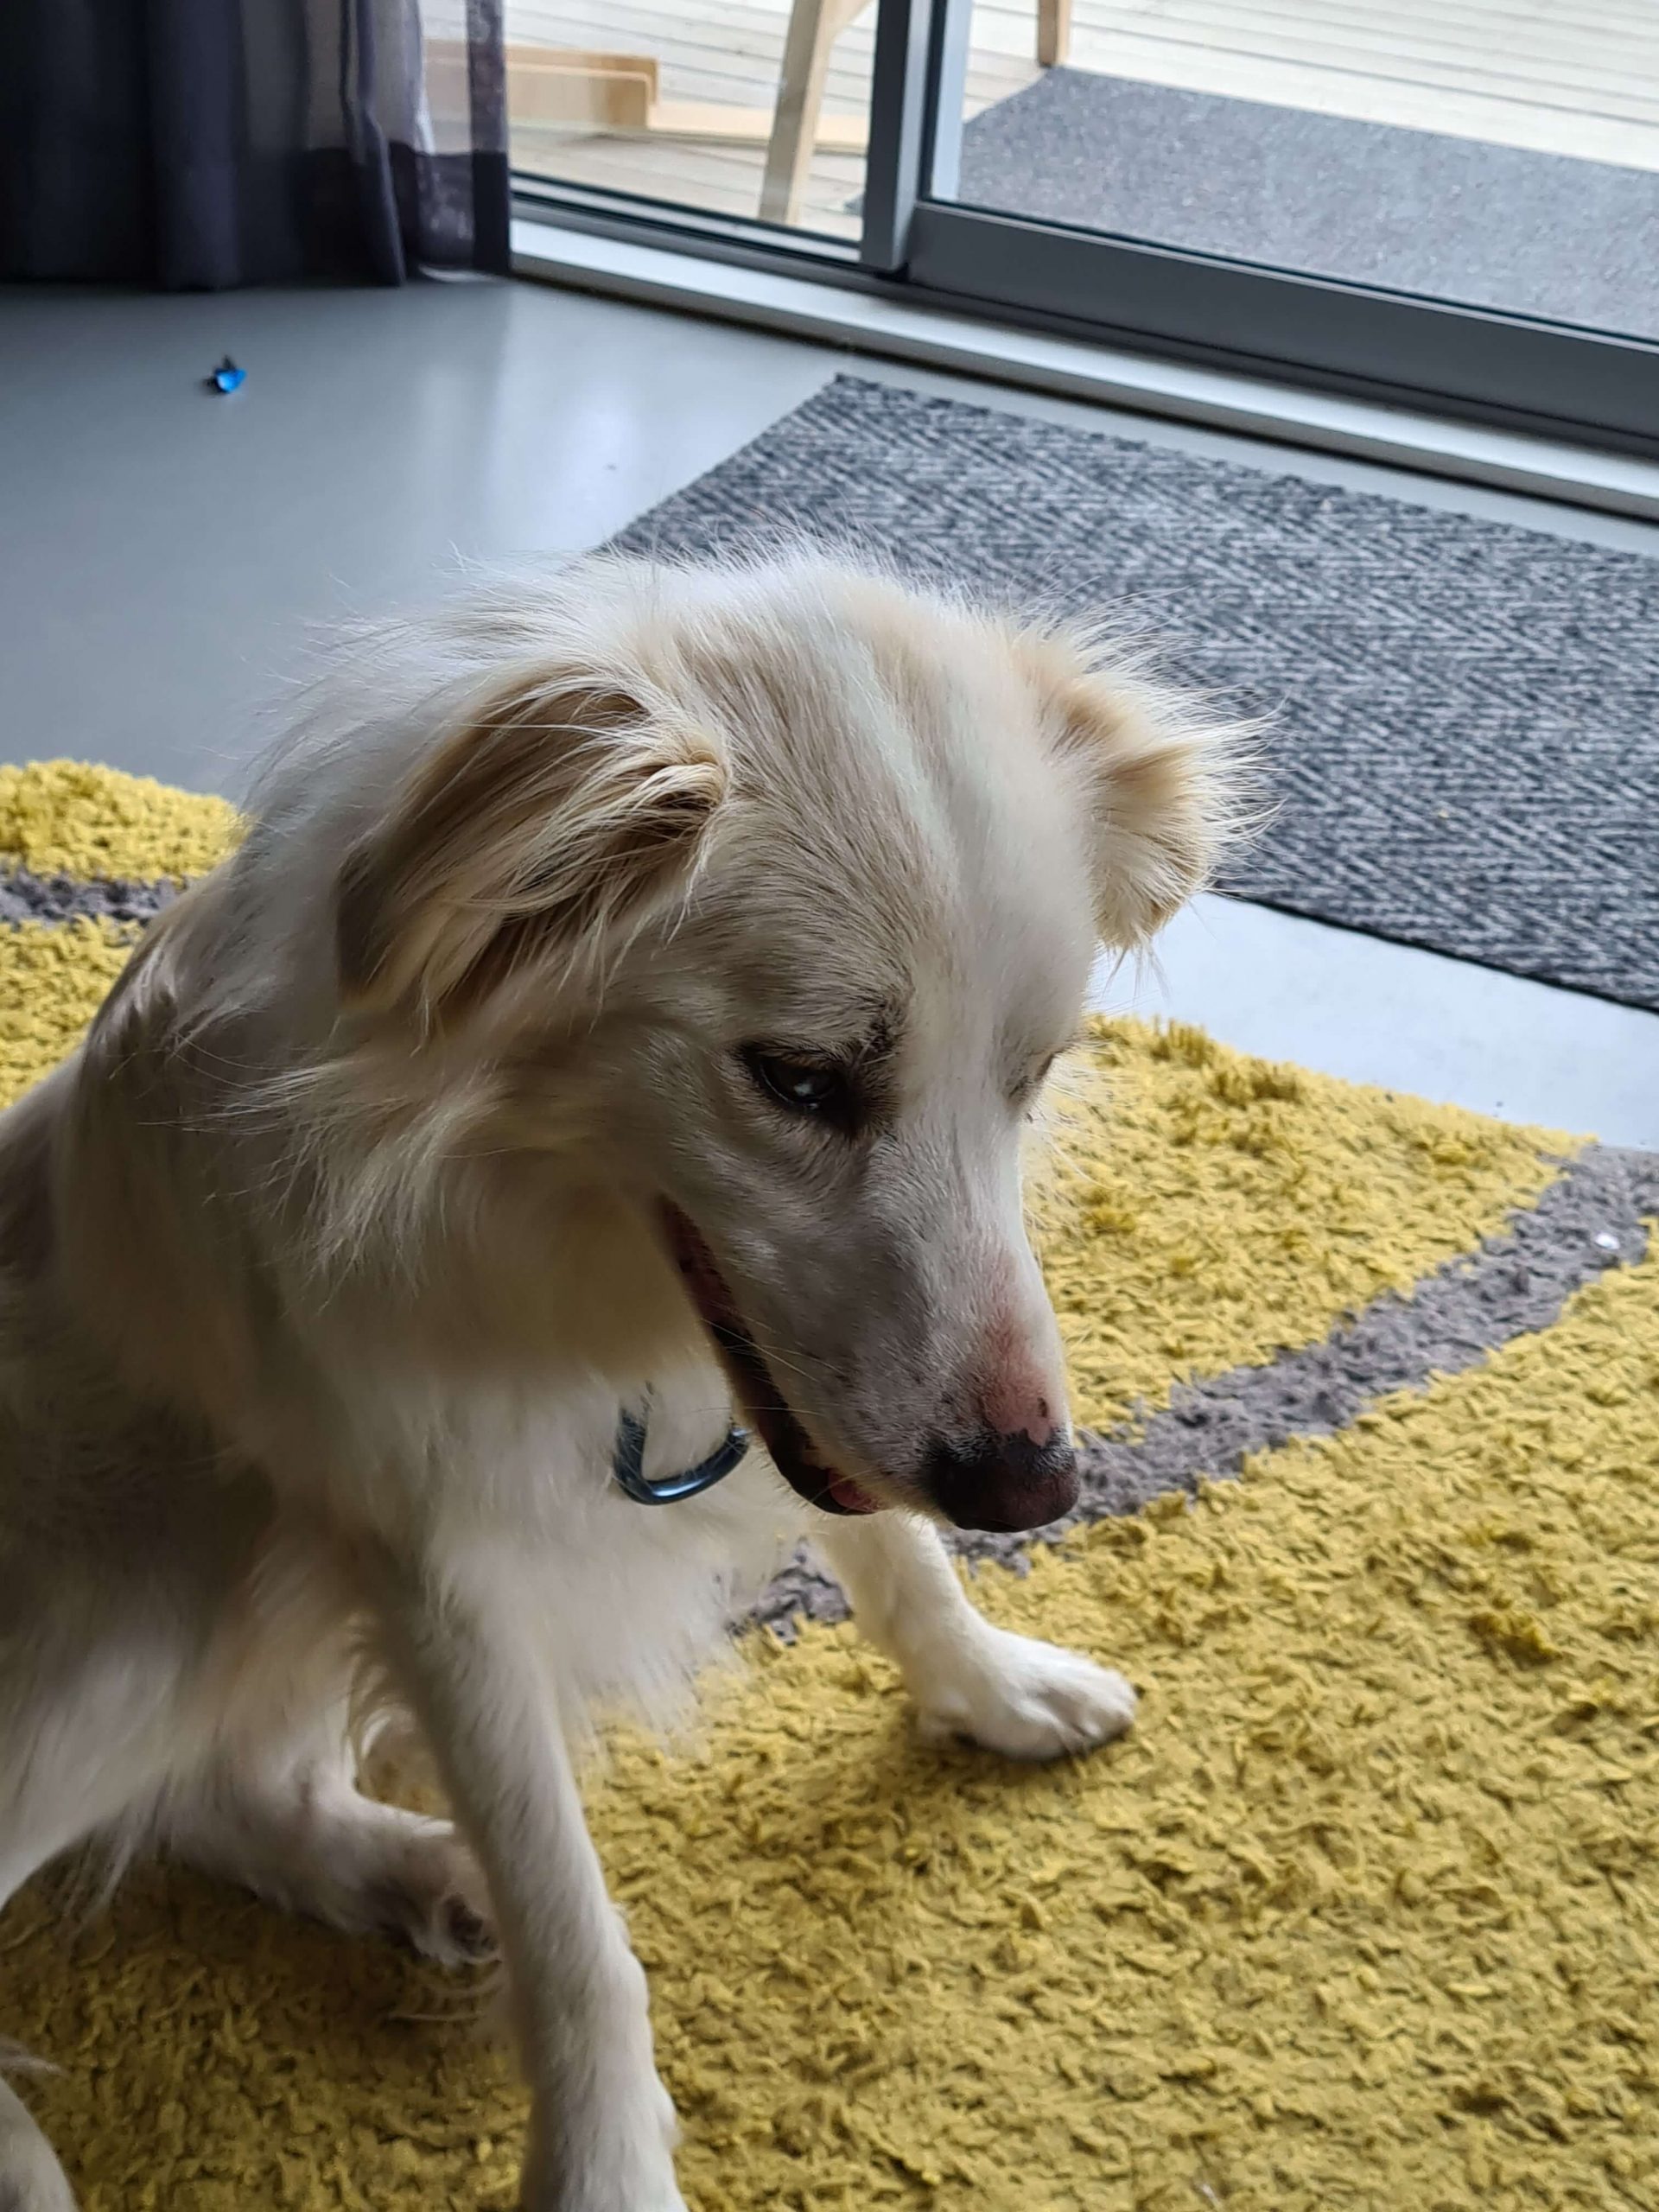 cream coloured dog sitting on a yellow carpet